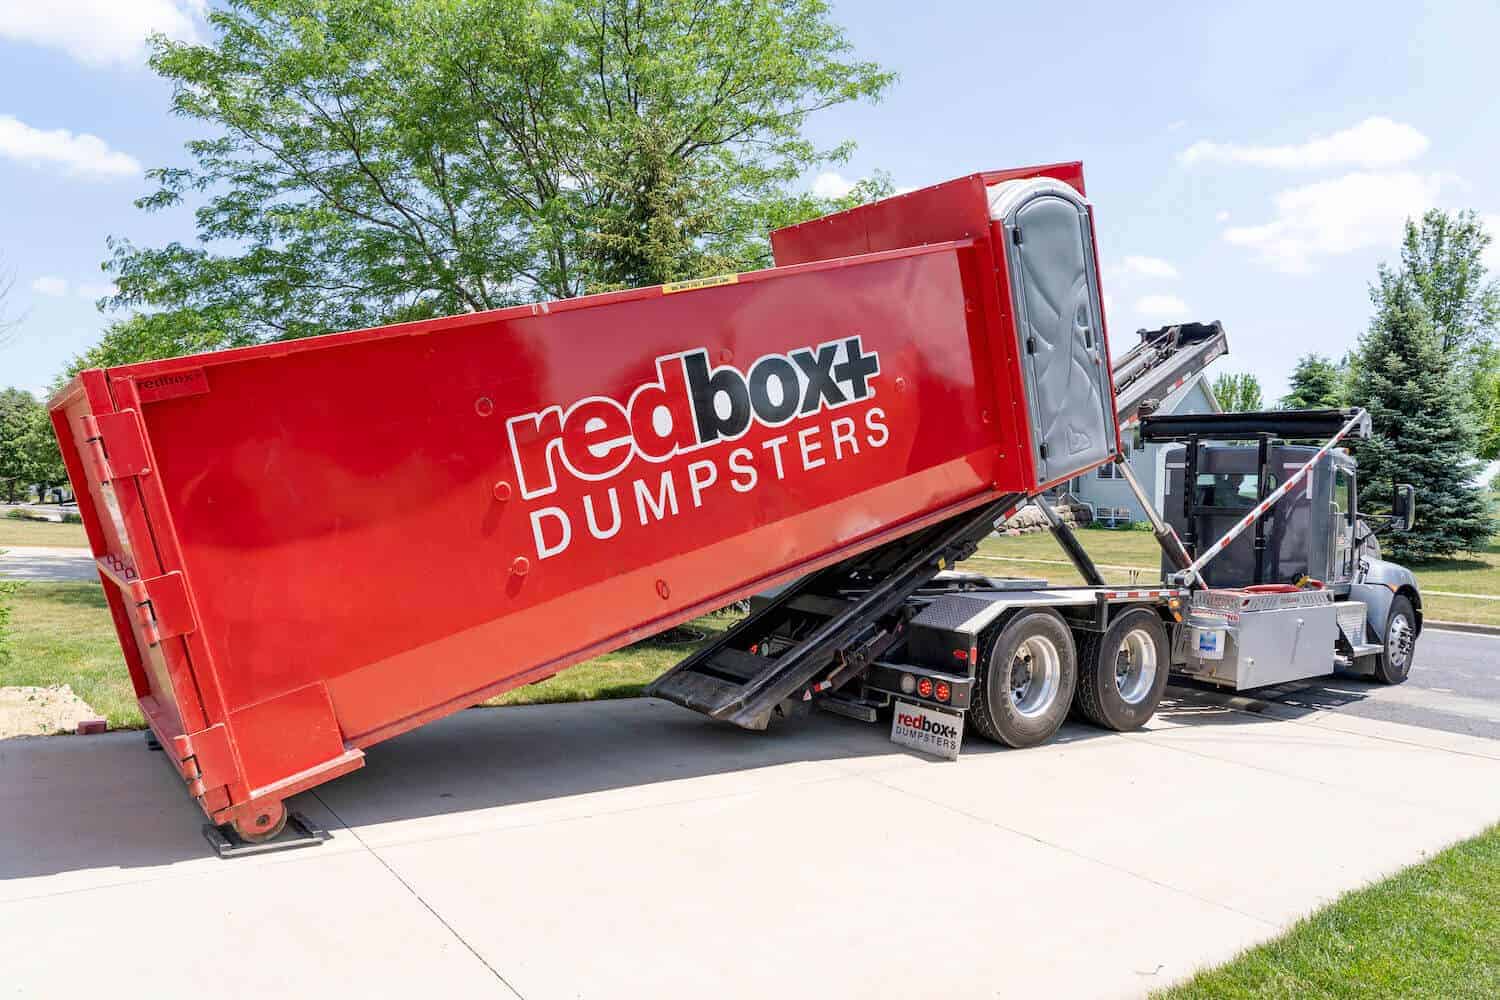 roll off dumpster rental in Columbus ohio